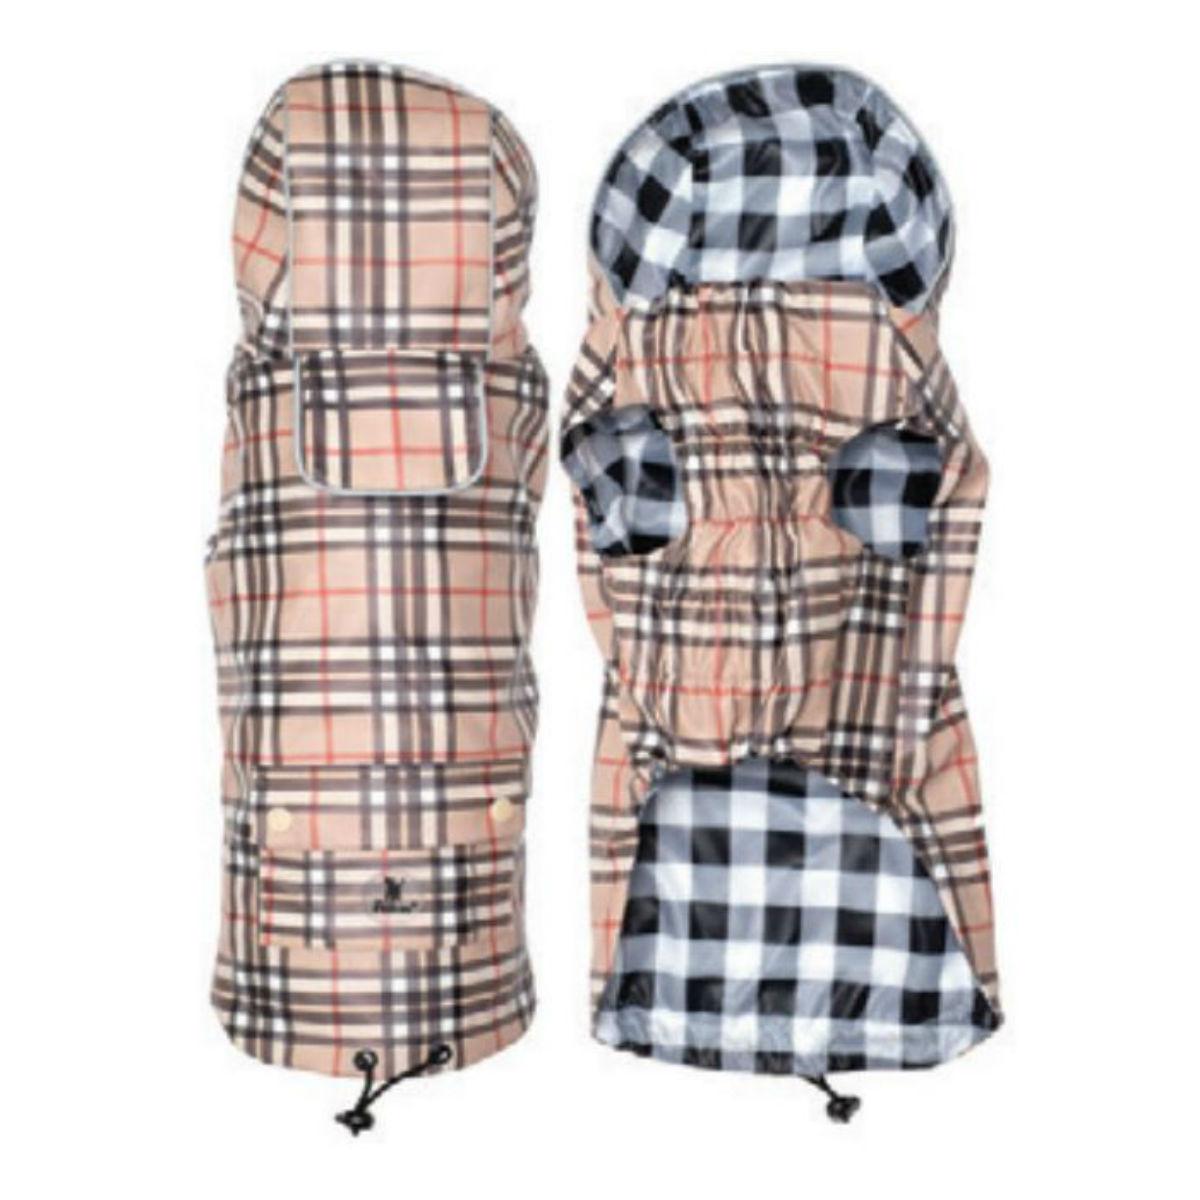 Worthy Dog London Dog Raincoat - Tan Plaid/Checkered